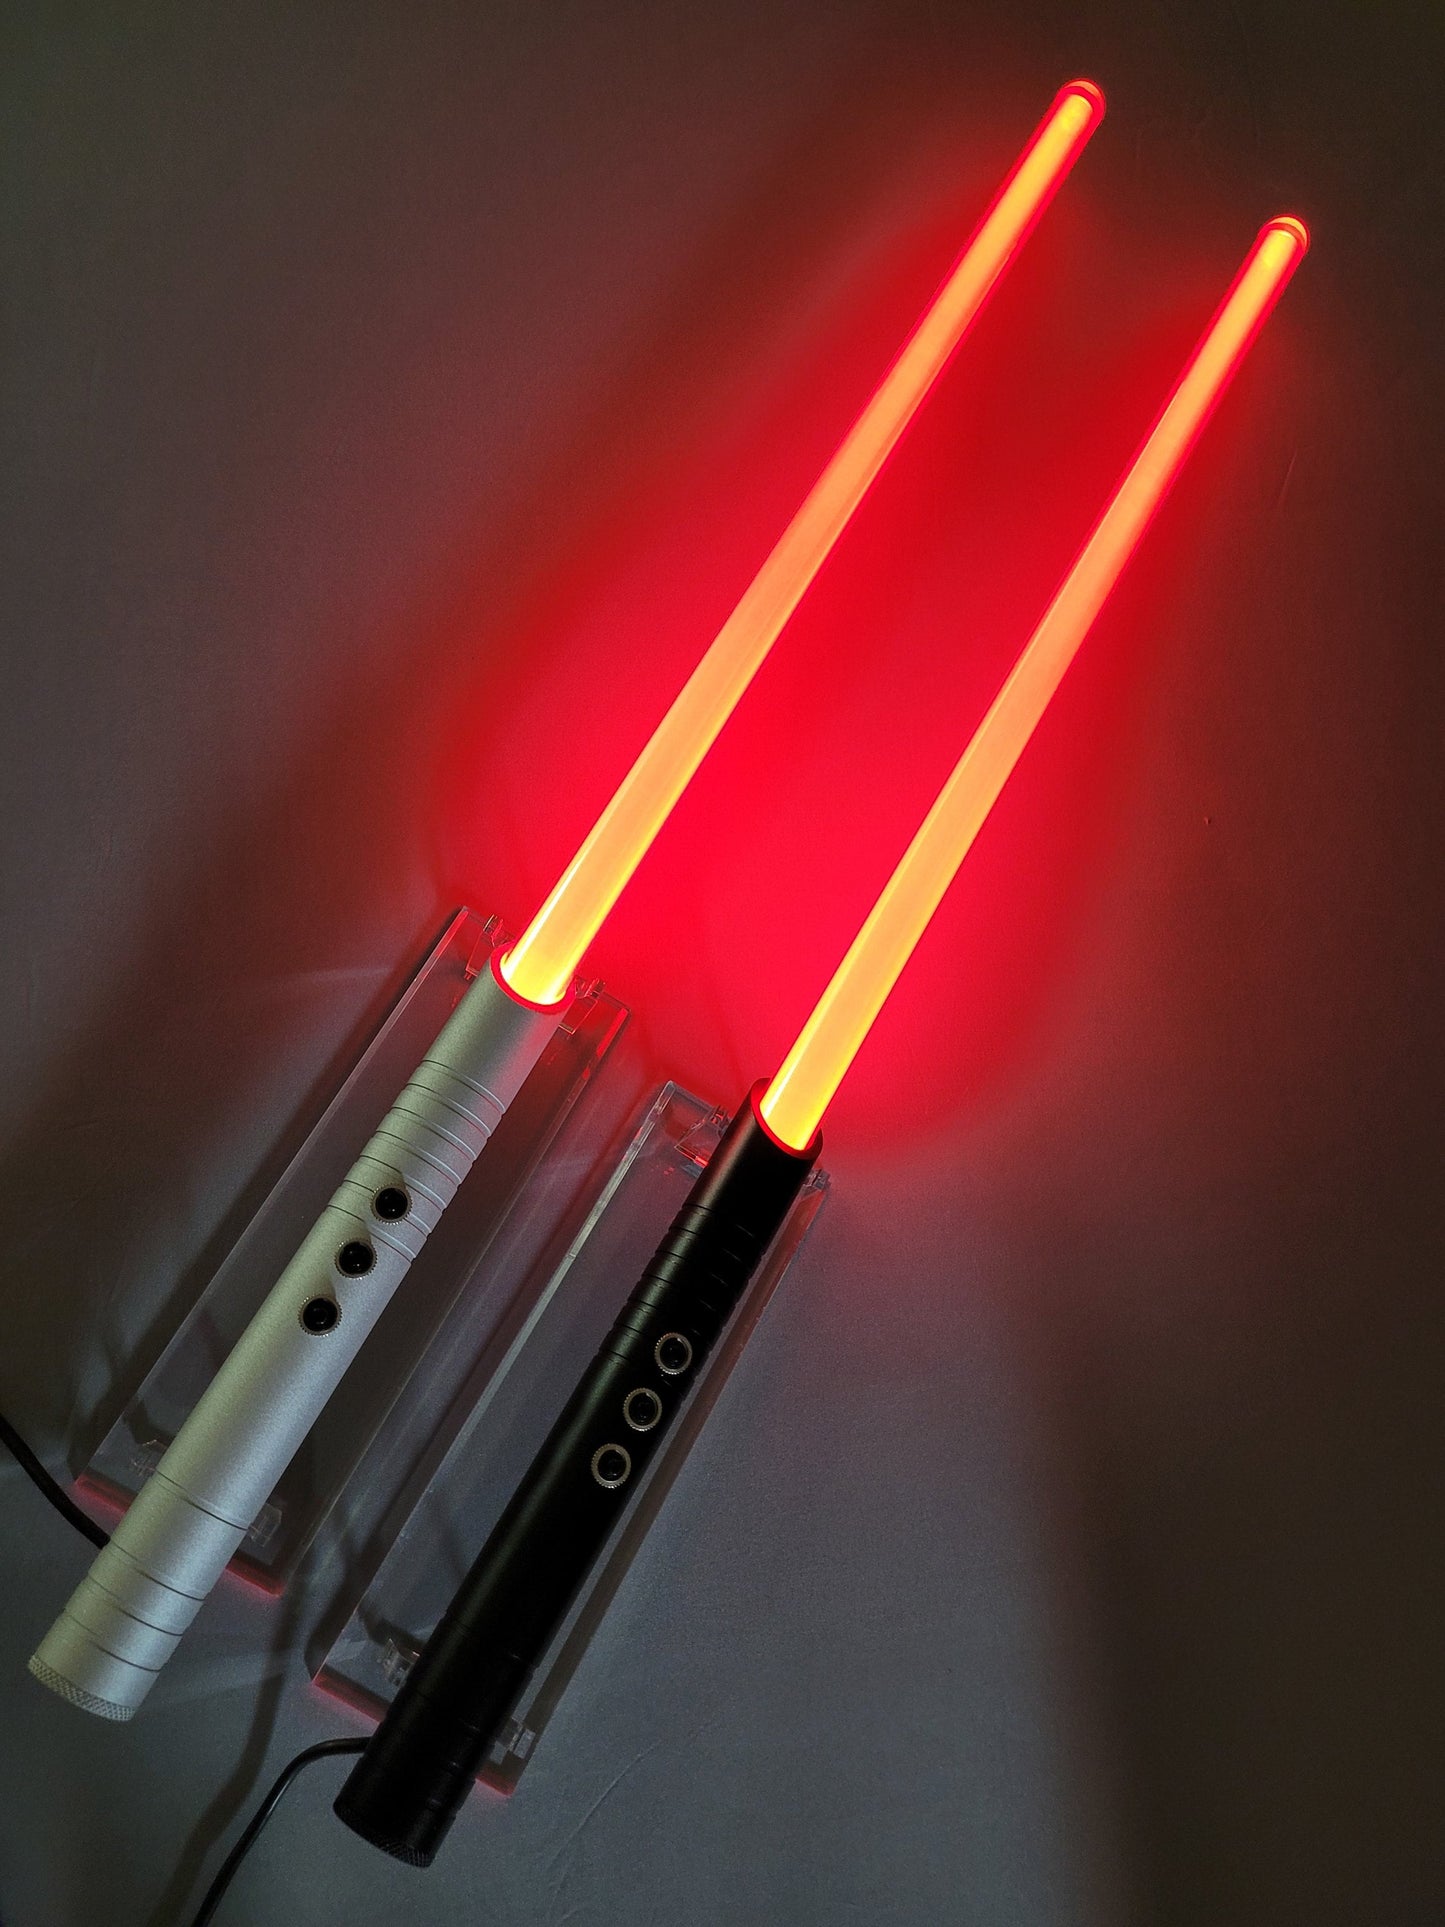 Lightsaber Color Change RGB Lightsaber Lamp Aluminum Hilt 7 Colors in one Star Wars Gift Bossaber Lamp Light wall Plug and USB "The Raver"